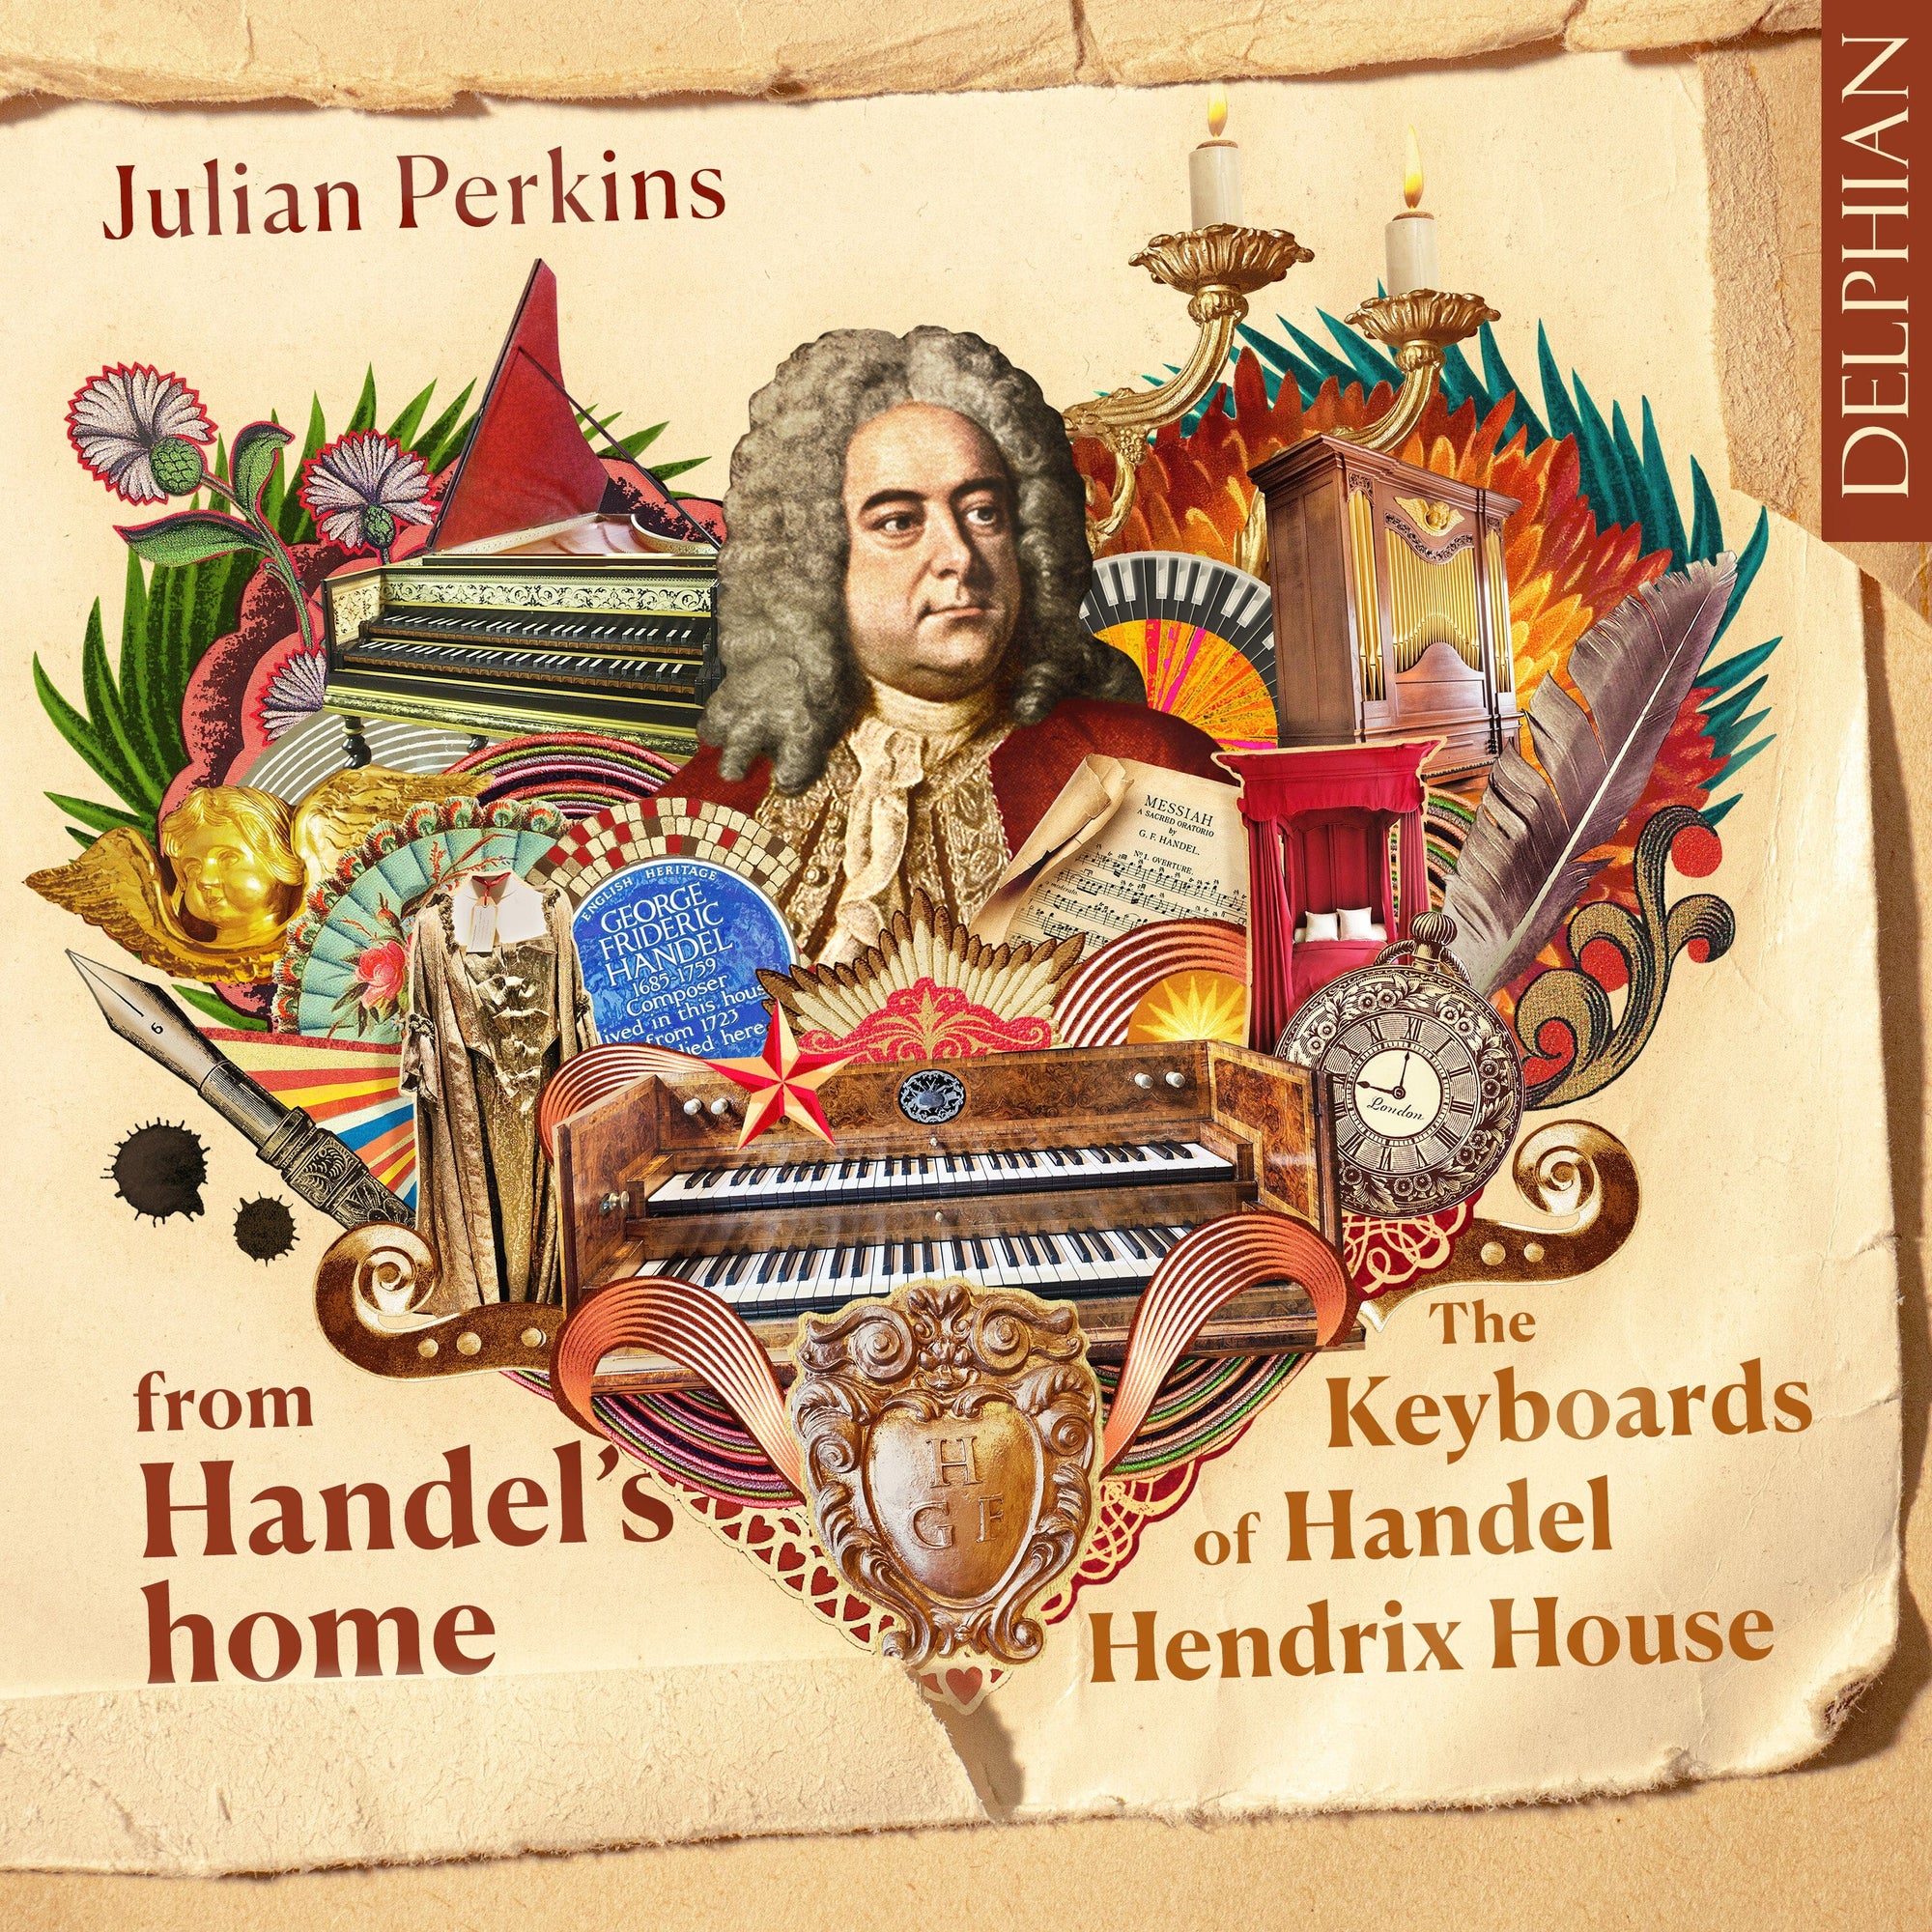 From Handel's Home: The Keyboards of Handel Hendrix House